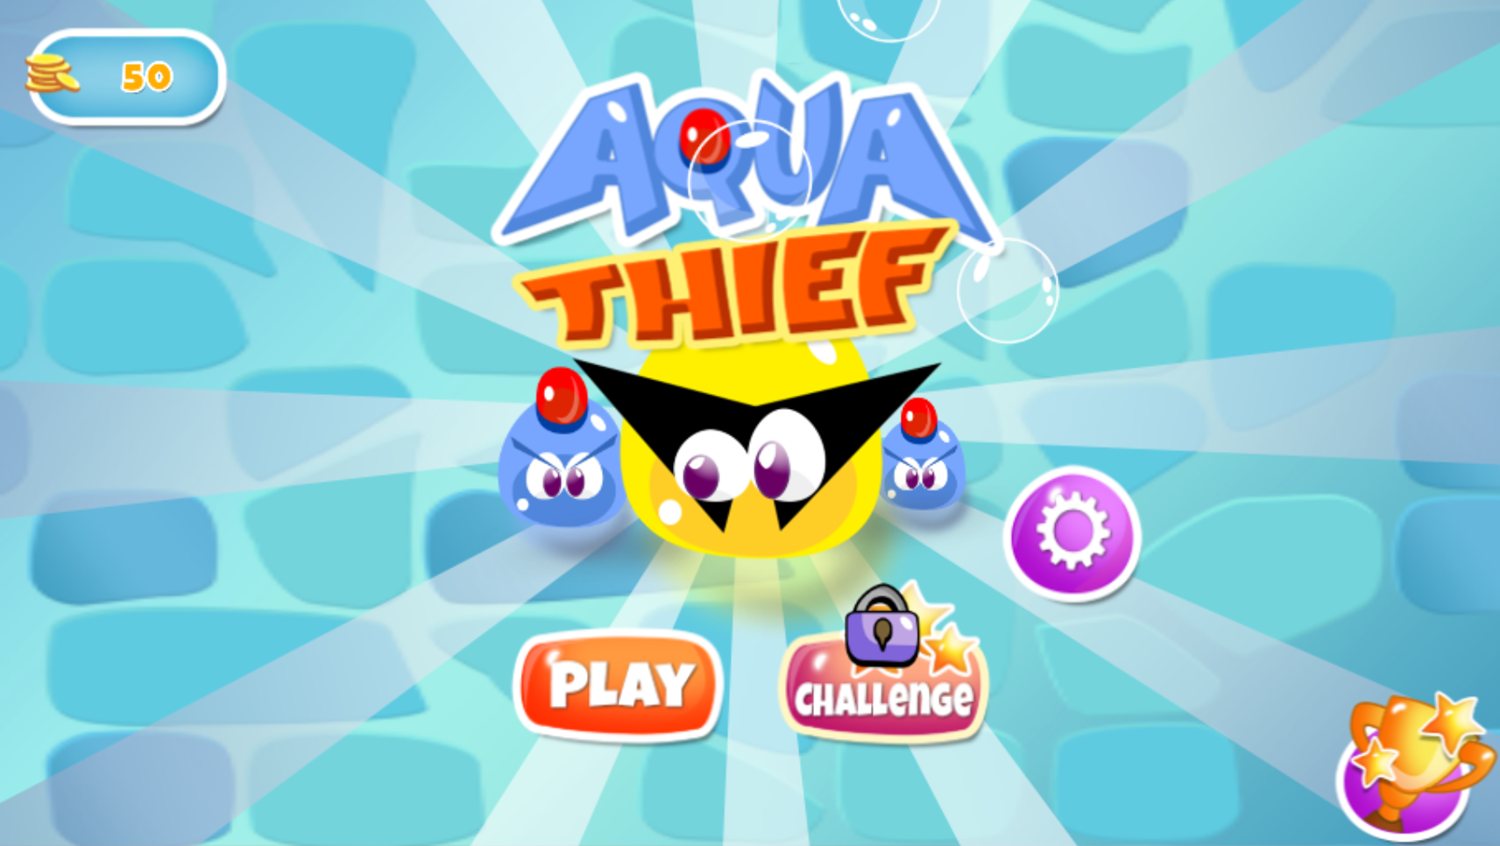 Aqua Thief Game Welcome Screen Screenshot.